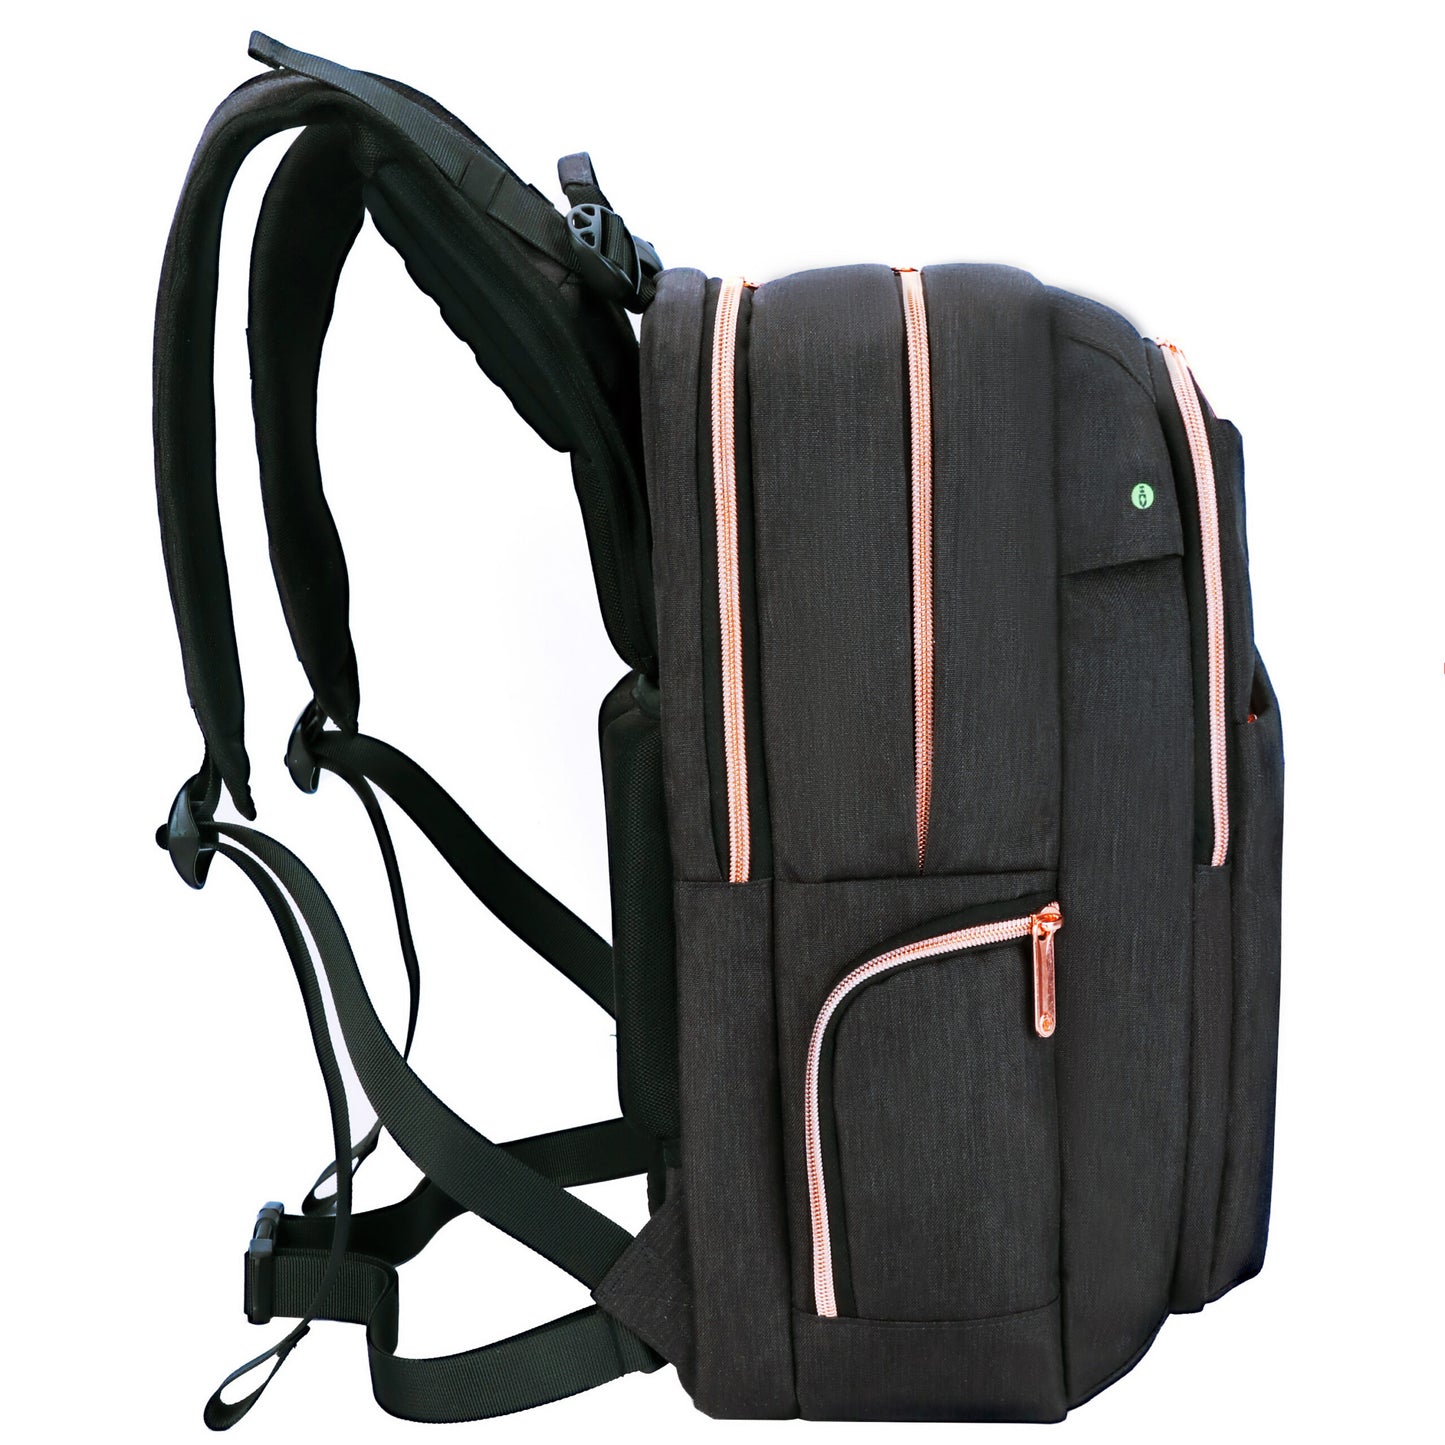 Swissdigital Katy Rose Black Computer Backpack with Built In Massager